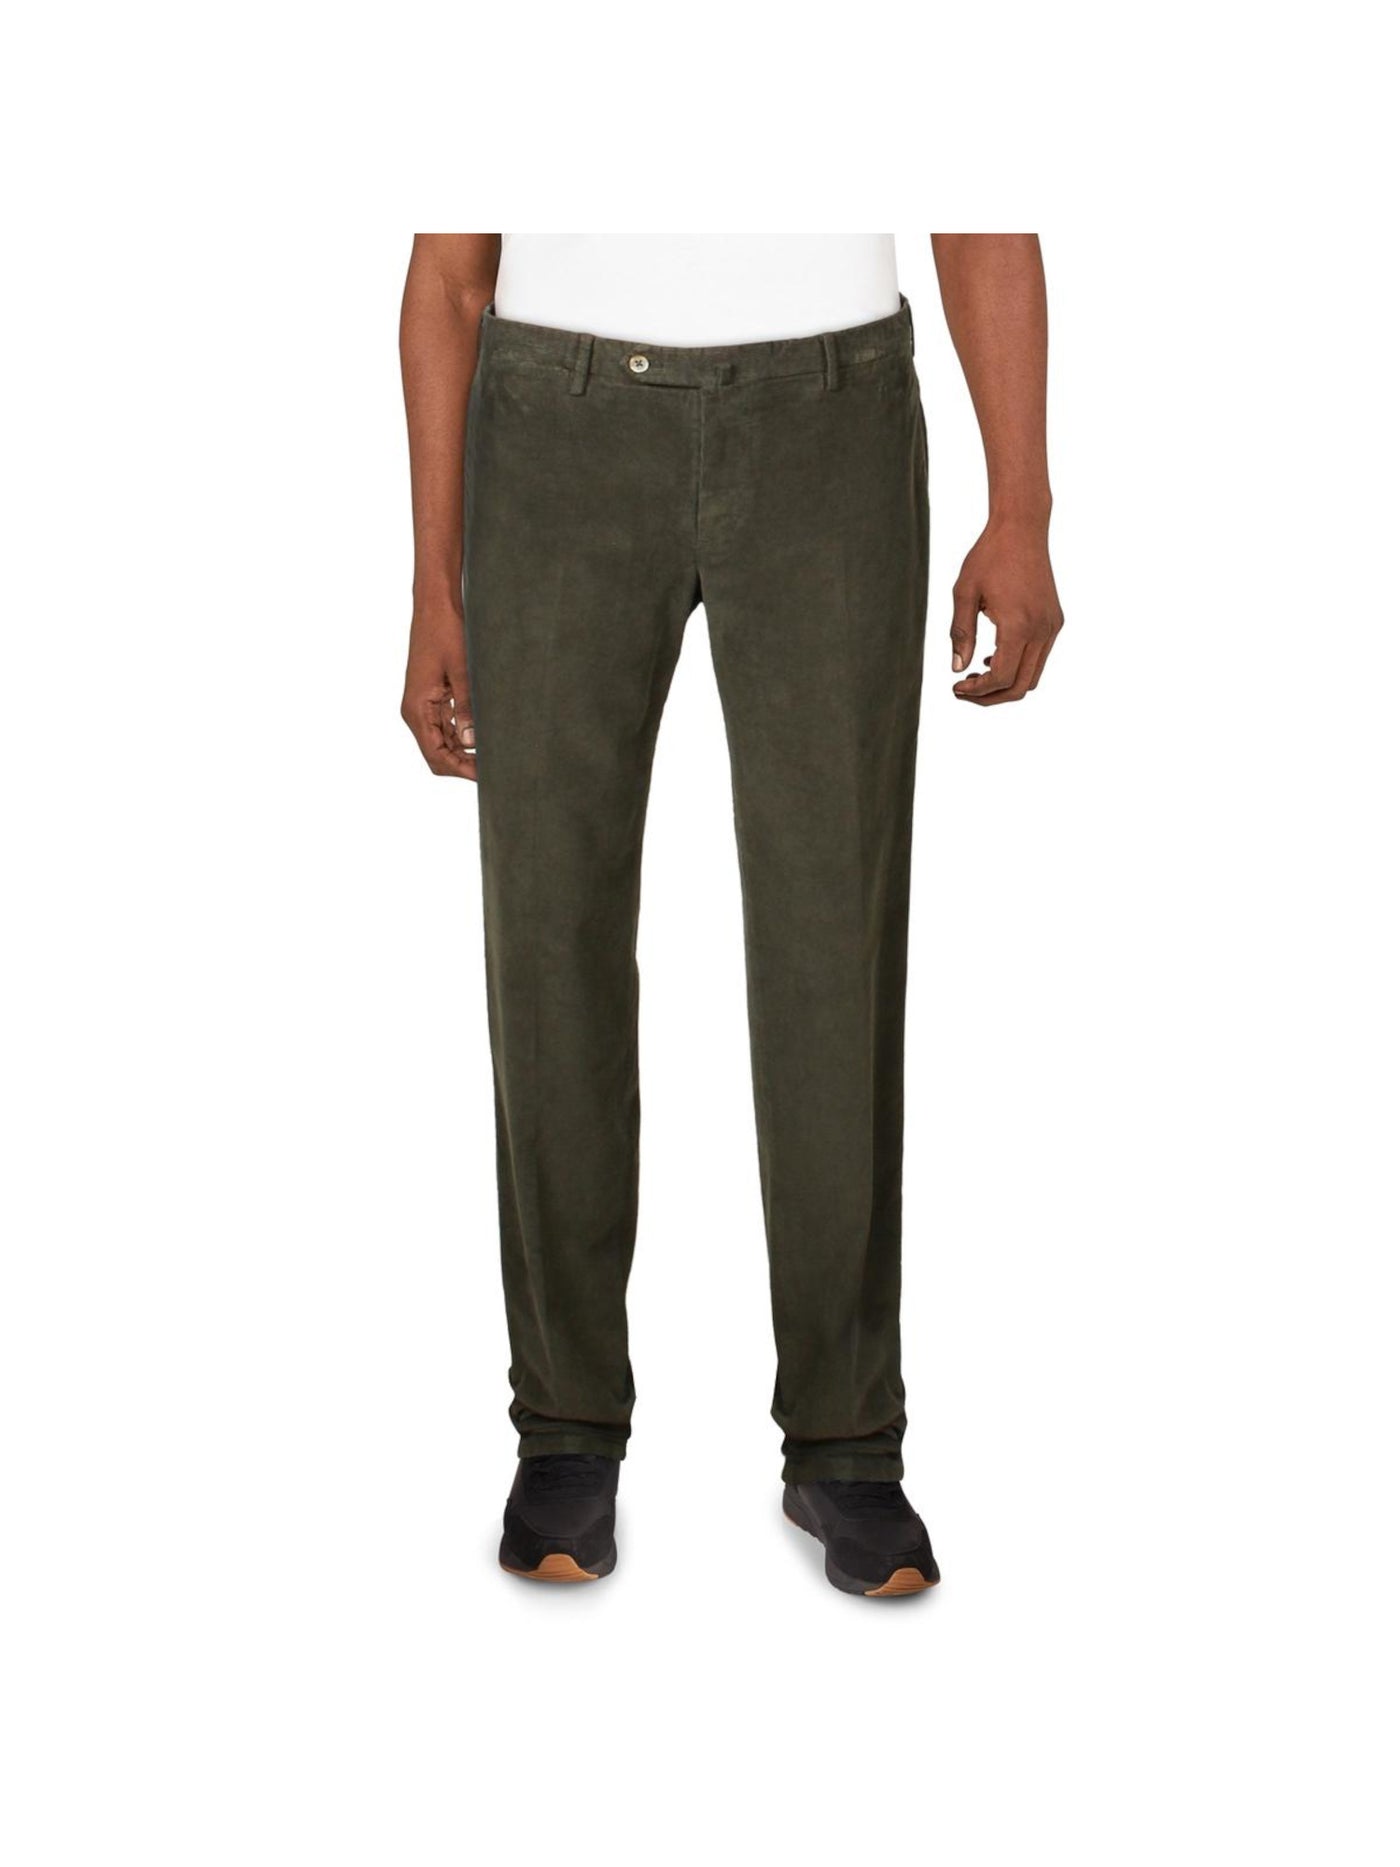 TORIN OPIFICIO Mens Gray Flat Front, Stretch, Regular Fit Pants 50